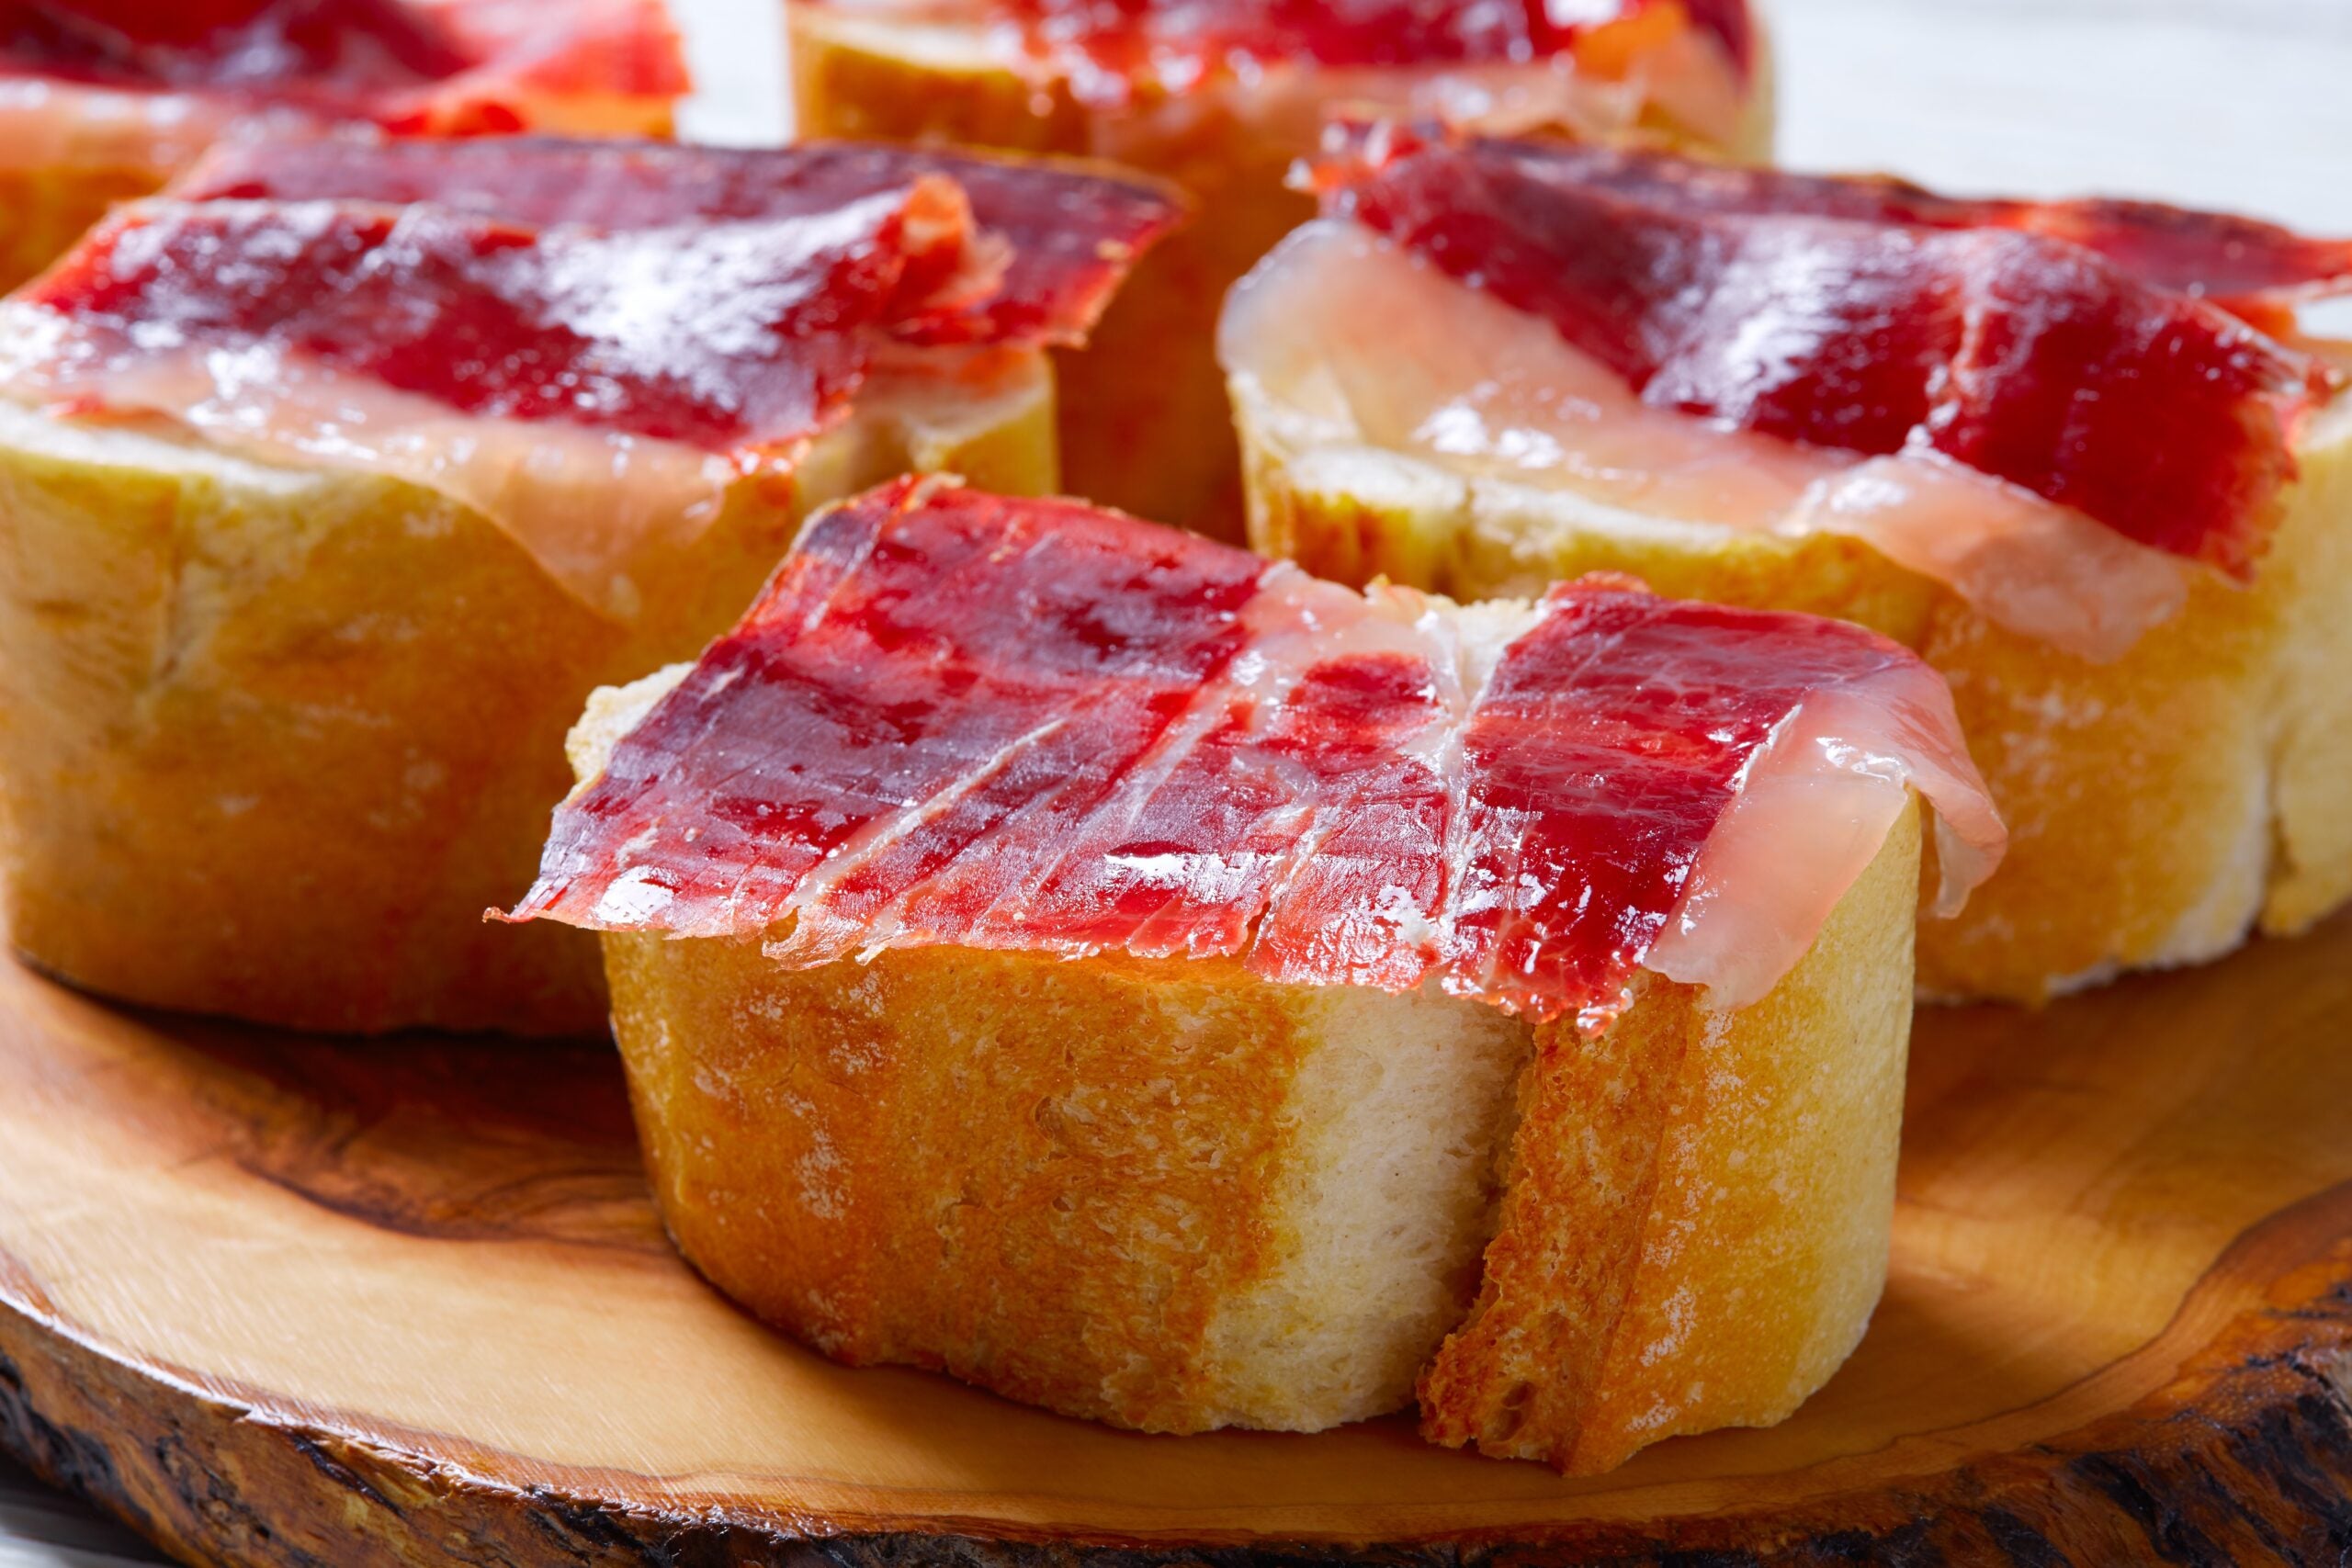  Close up Serrano Ham Shoulder cut slices on bread